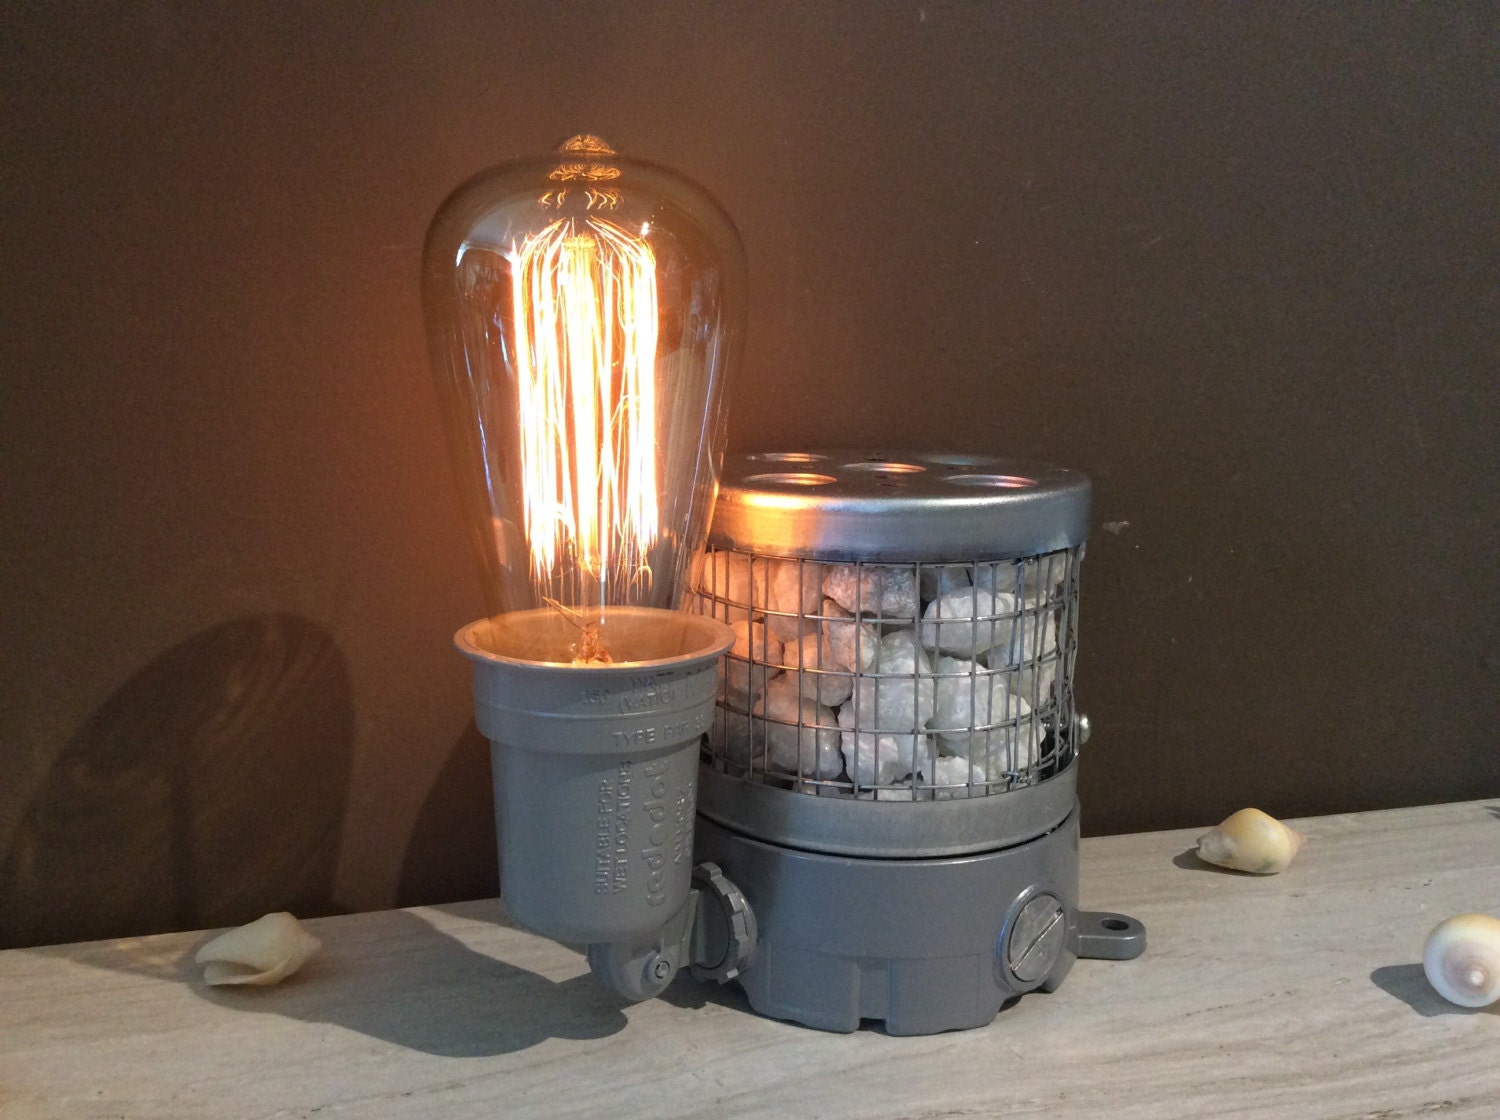 Modern Industrial Table Lamp 40w Edison Light Bulb included